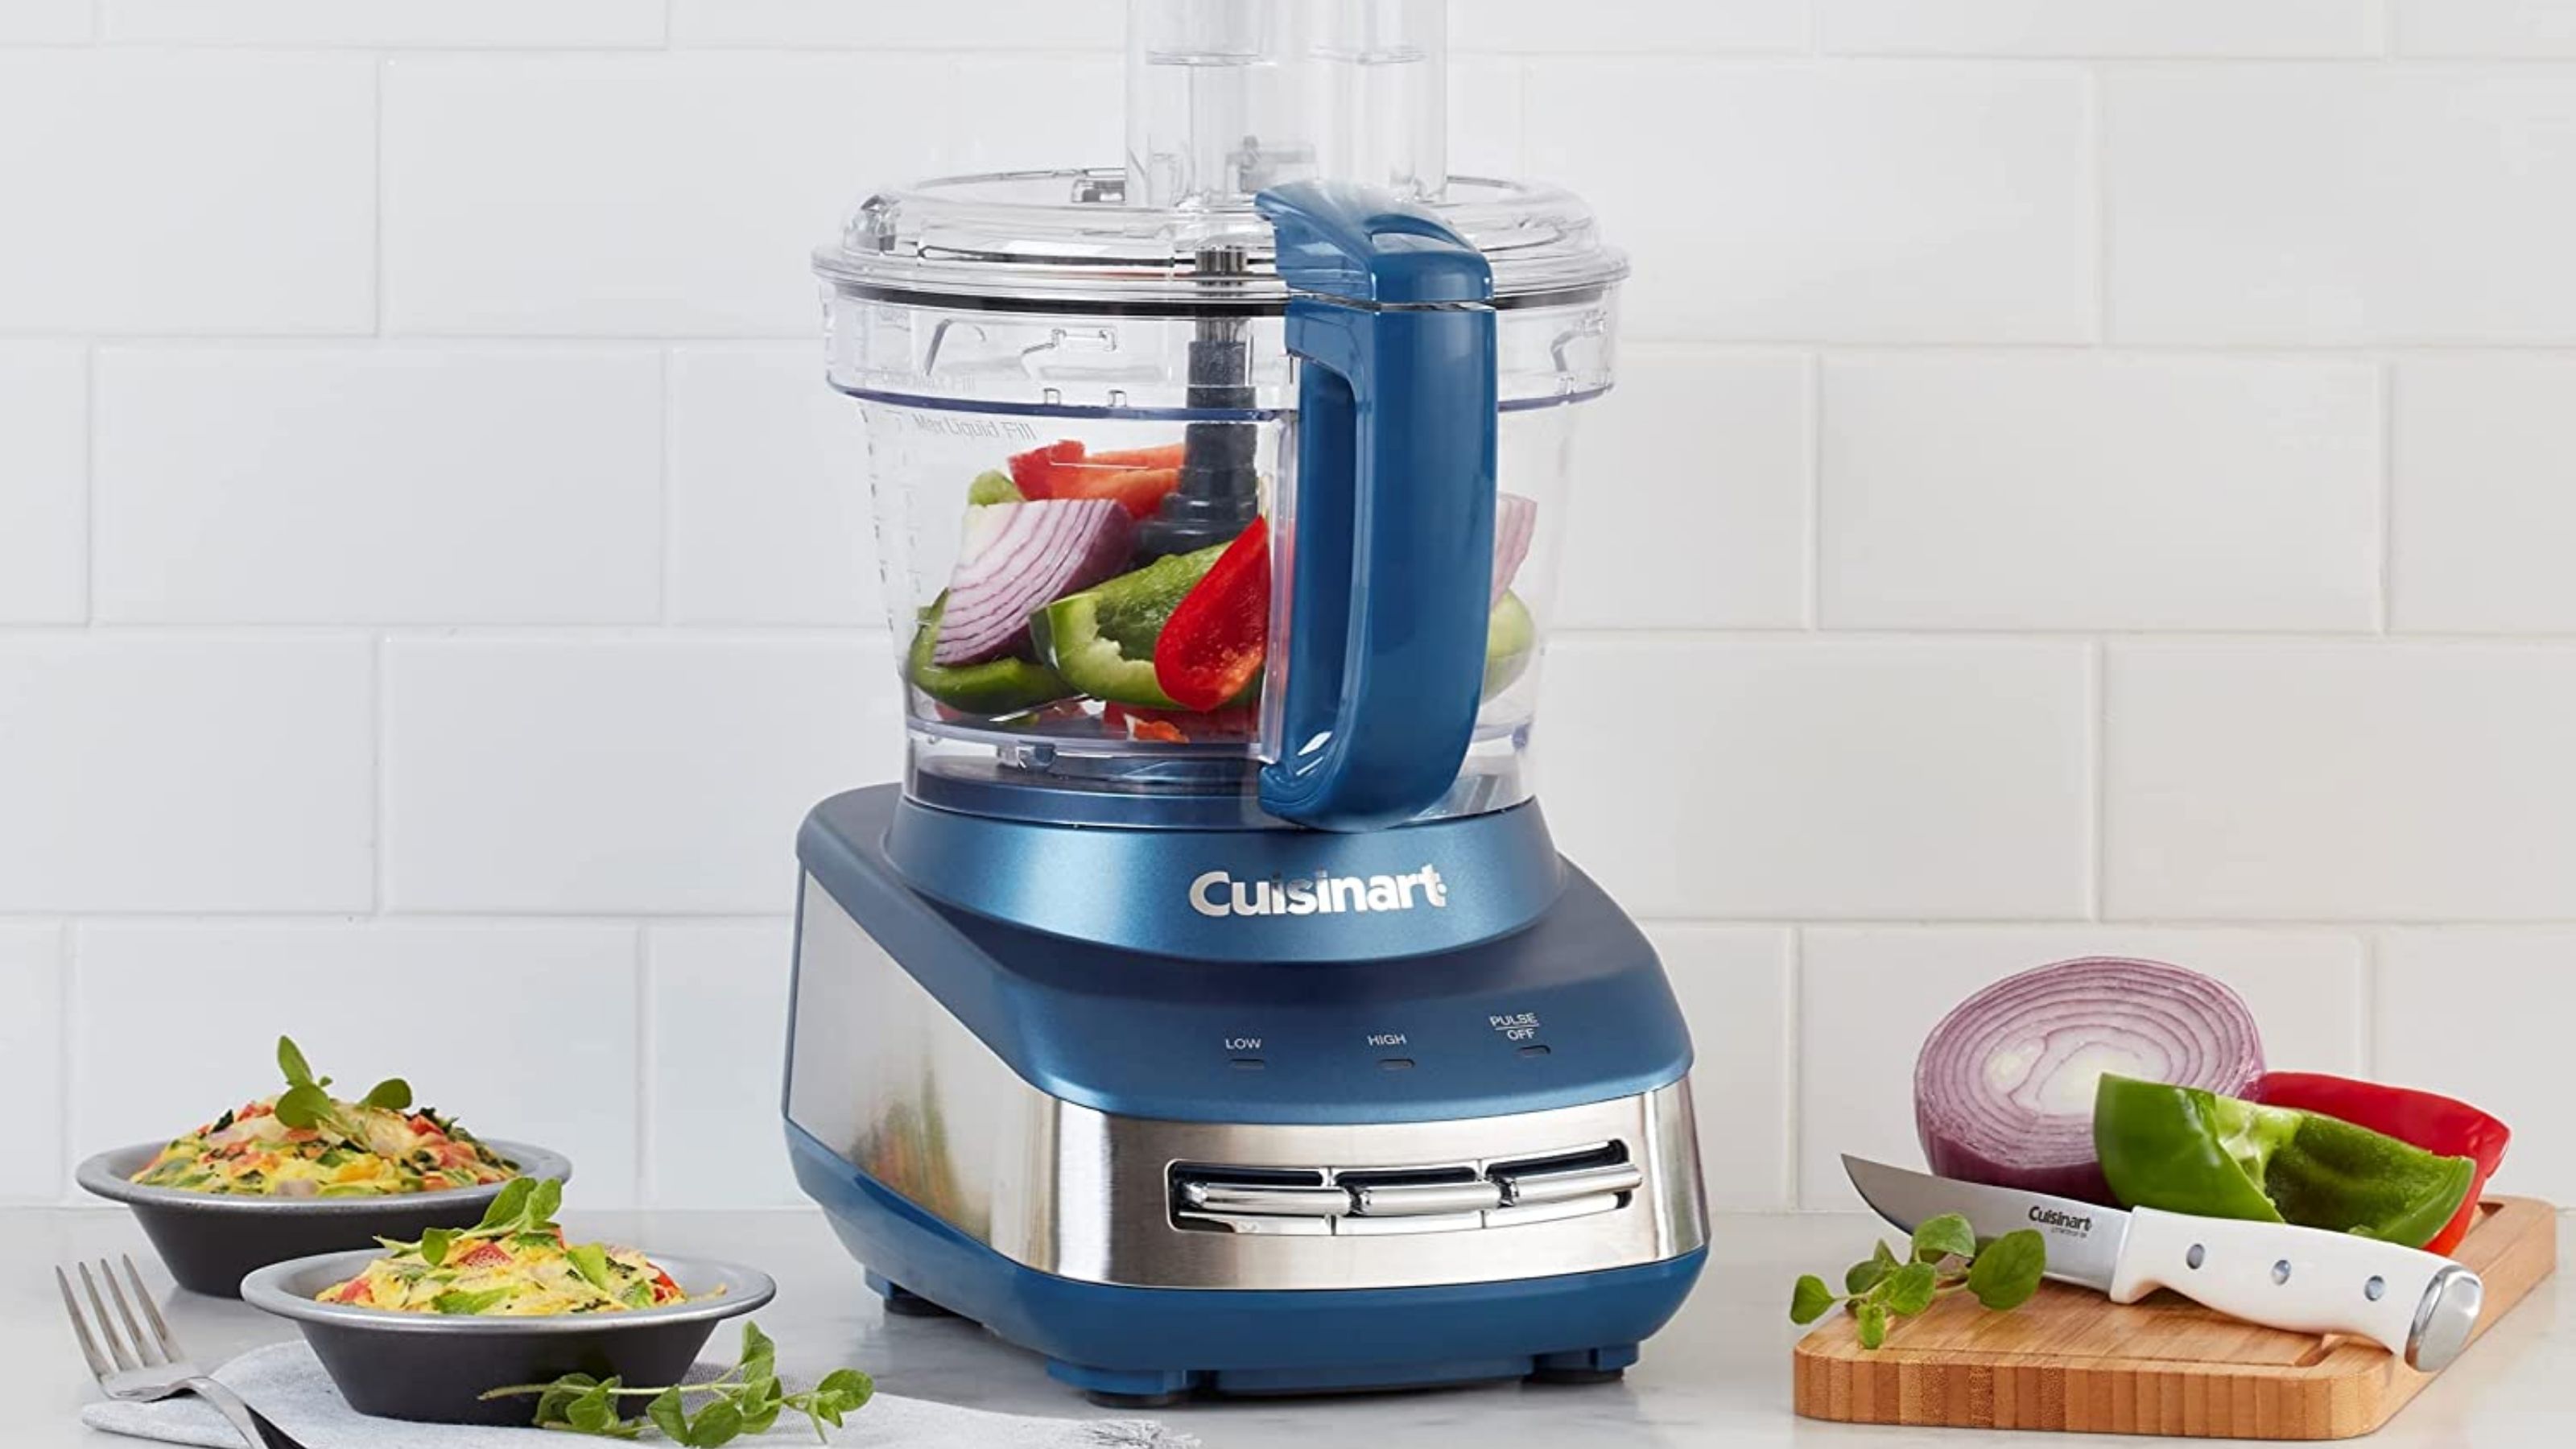 Cuisinart Elemental 11-Cup Food Processor Chopper + Reviews